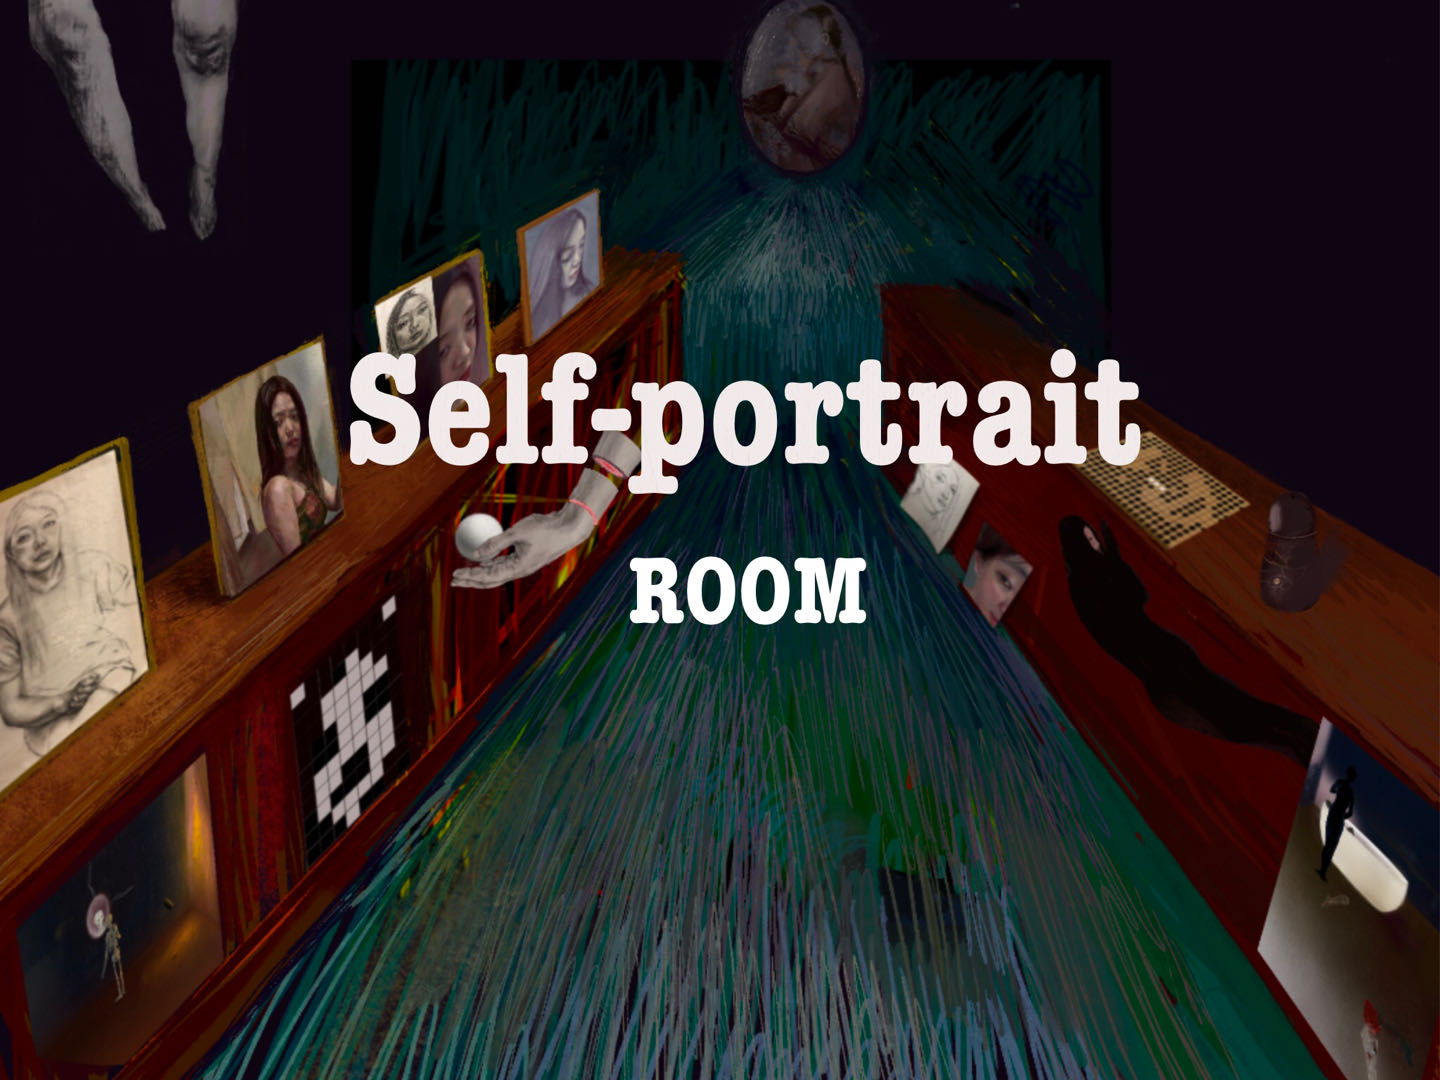 Self-portrait Room